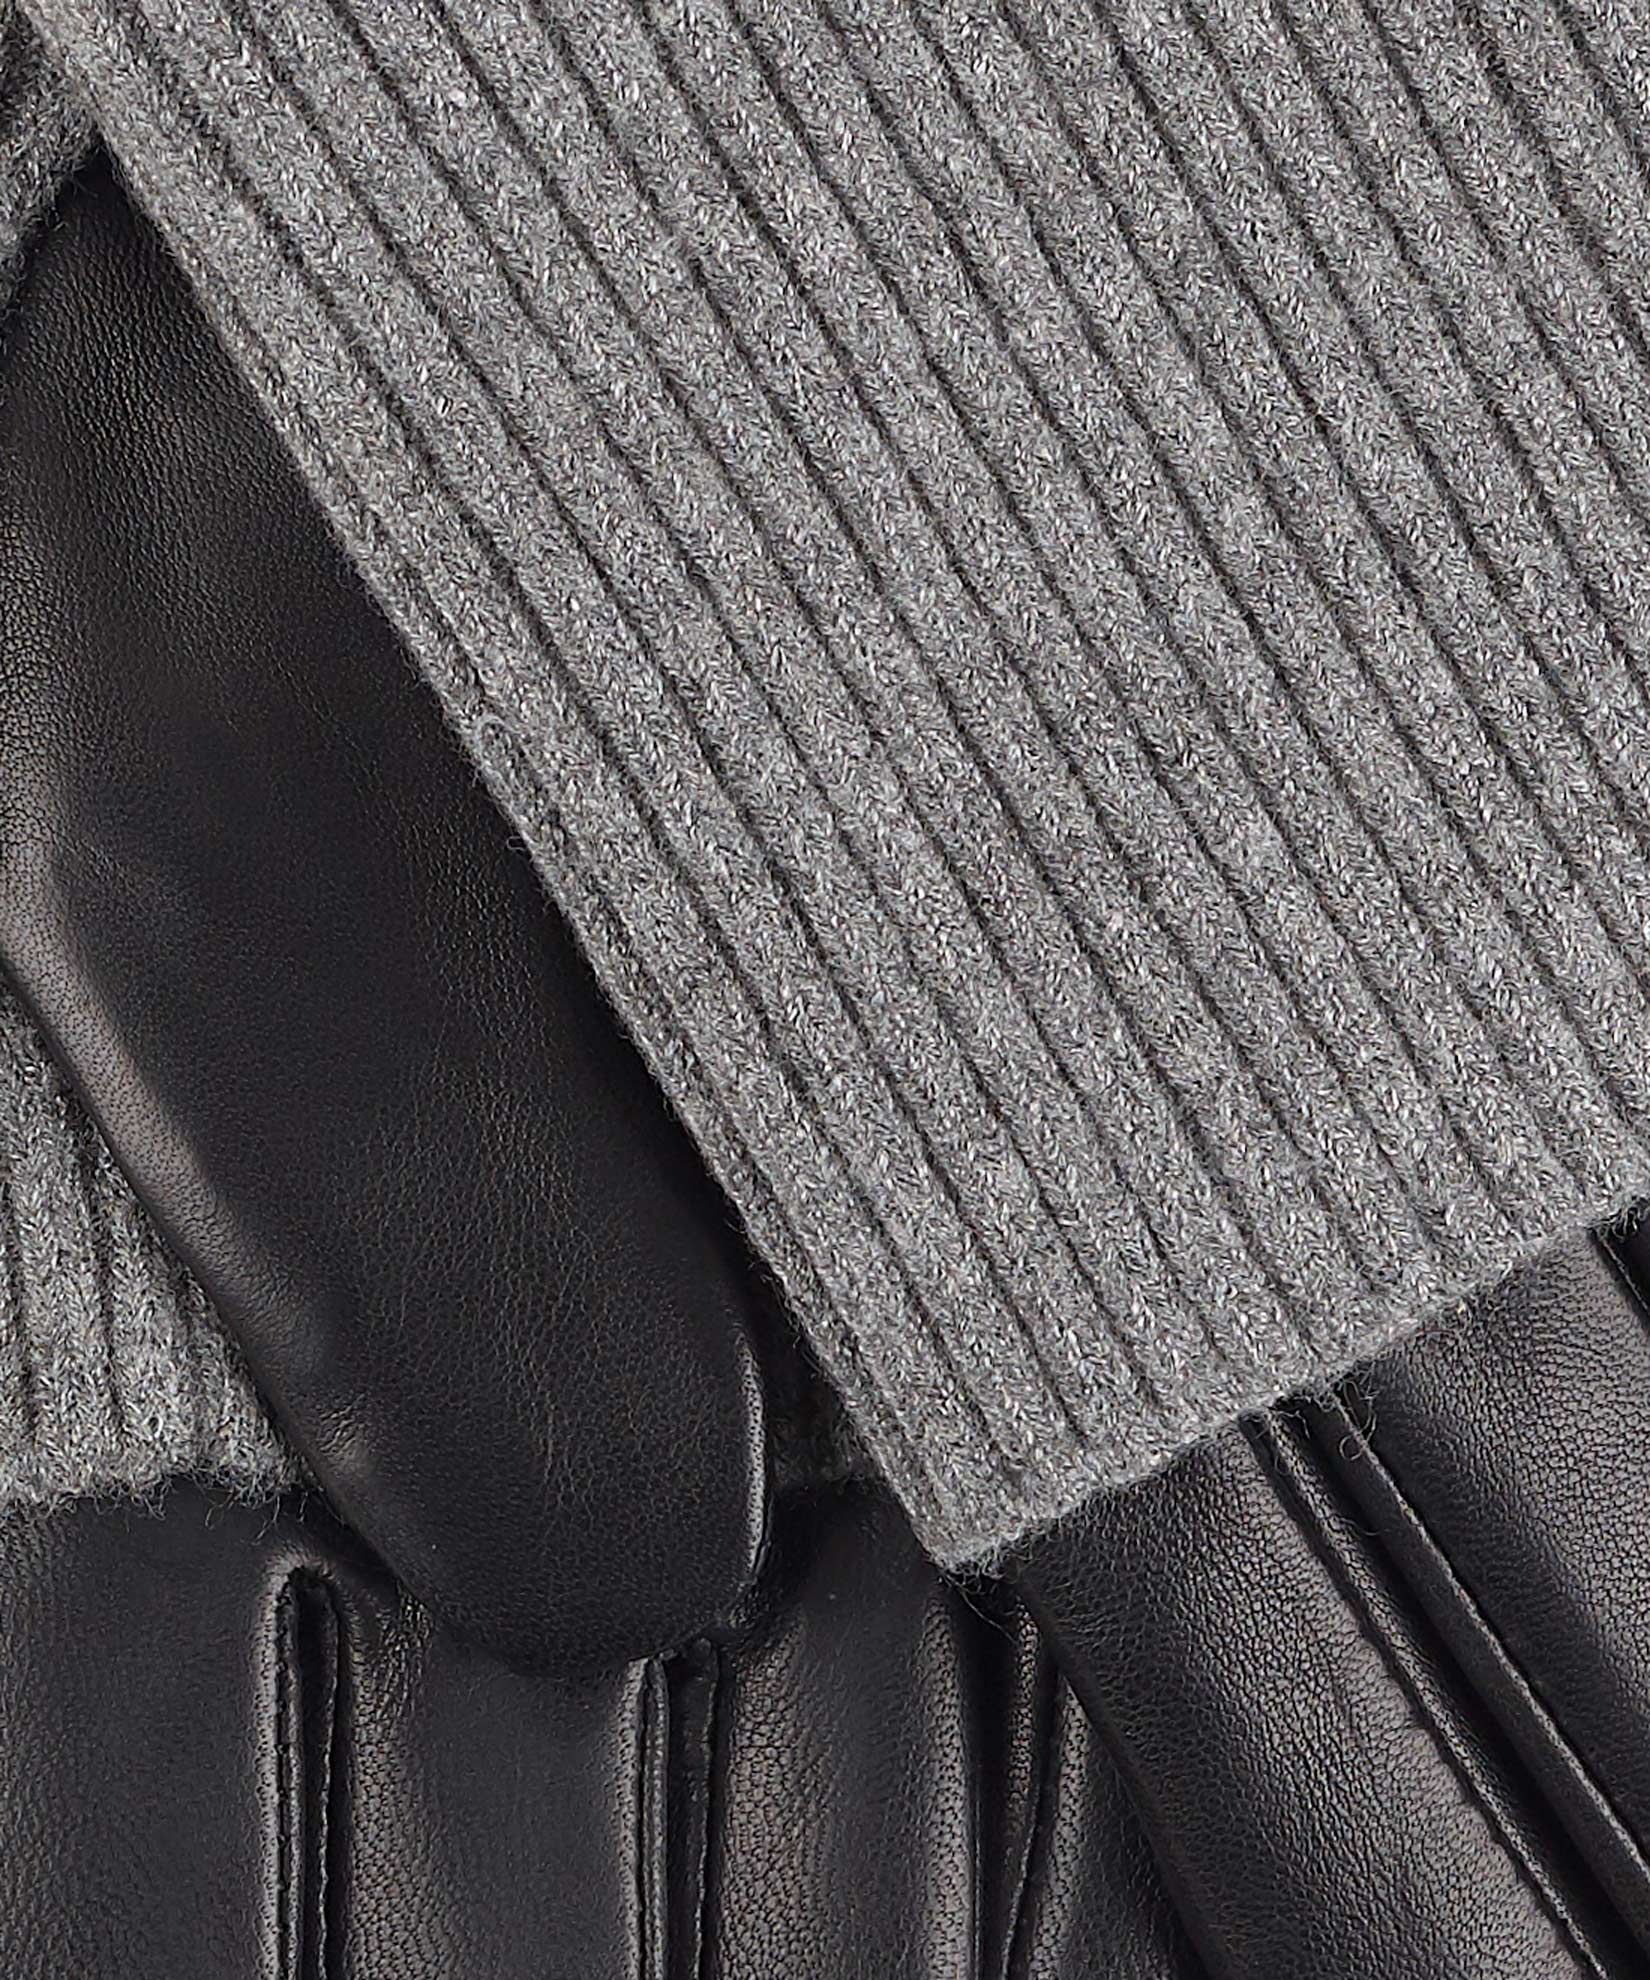 Fold Down Cuff Glove in color Black